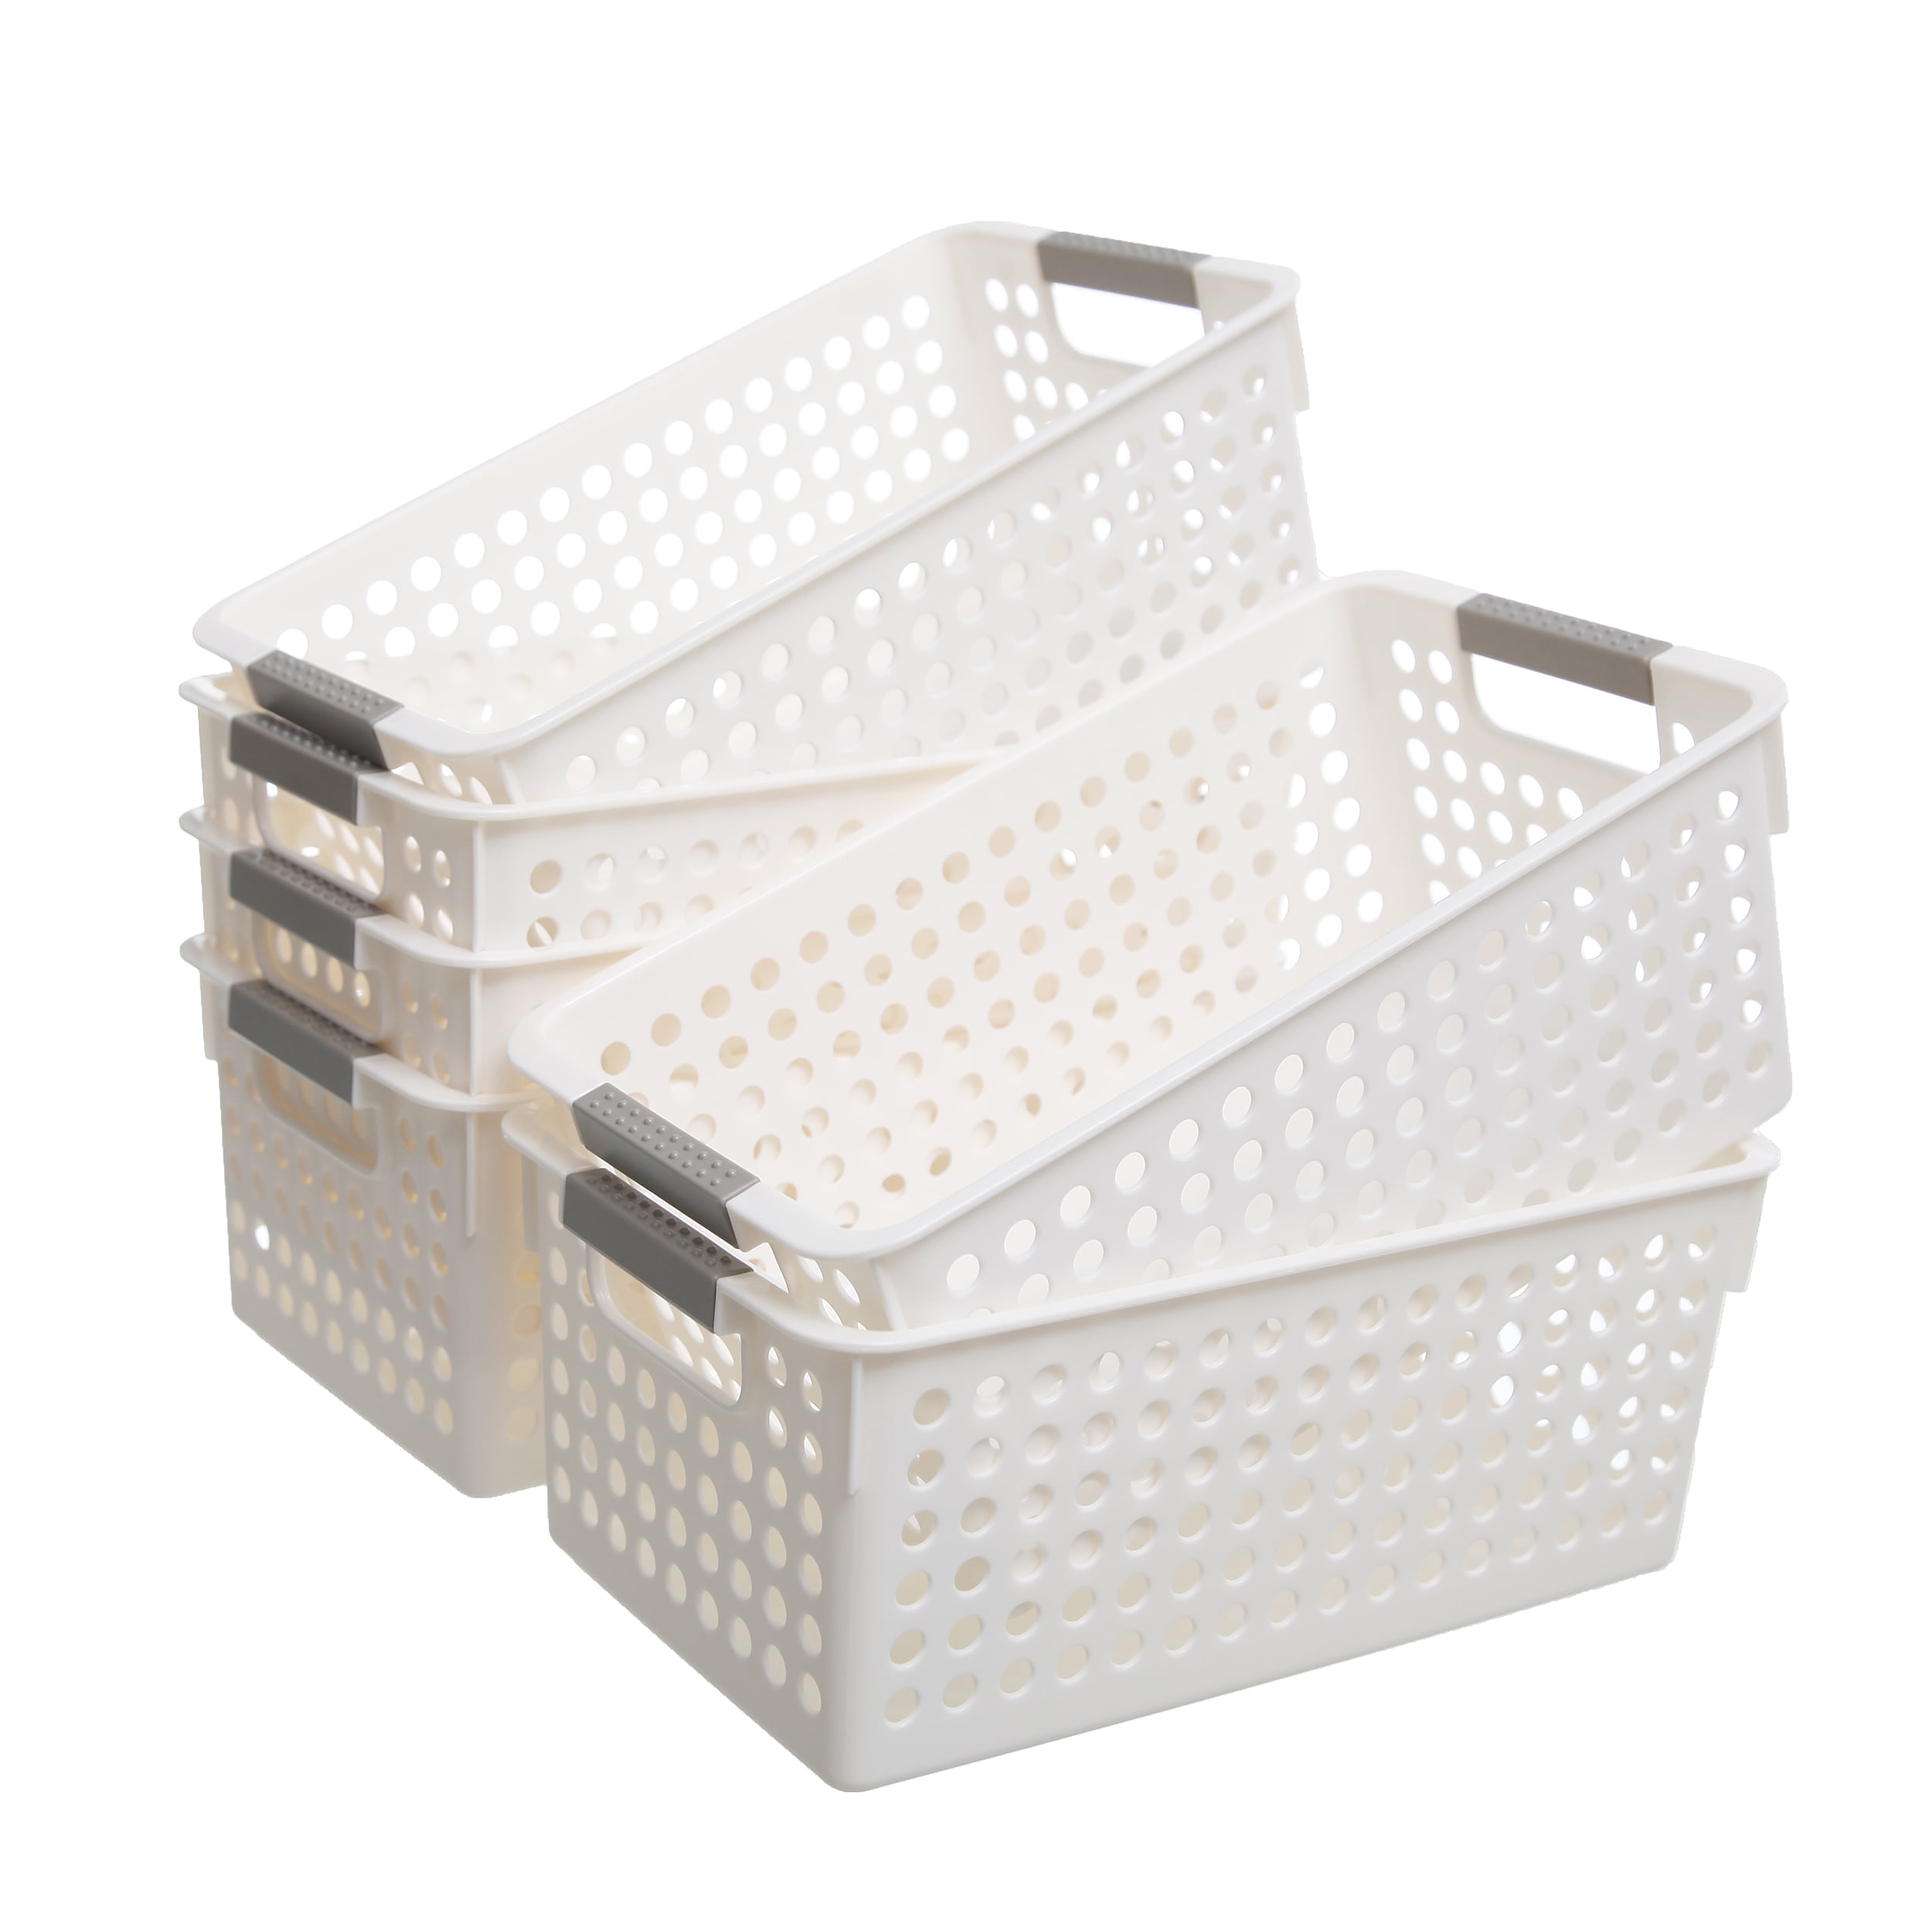 Jucoan 6 Pack White Plastic Storage Baskets, 12 X 7.5 X 4 Inch